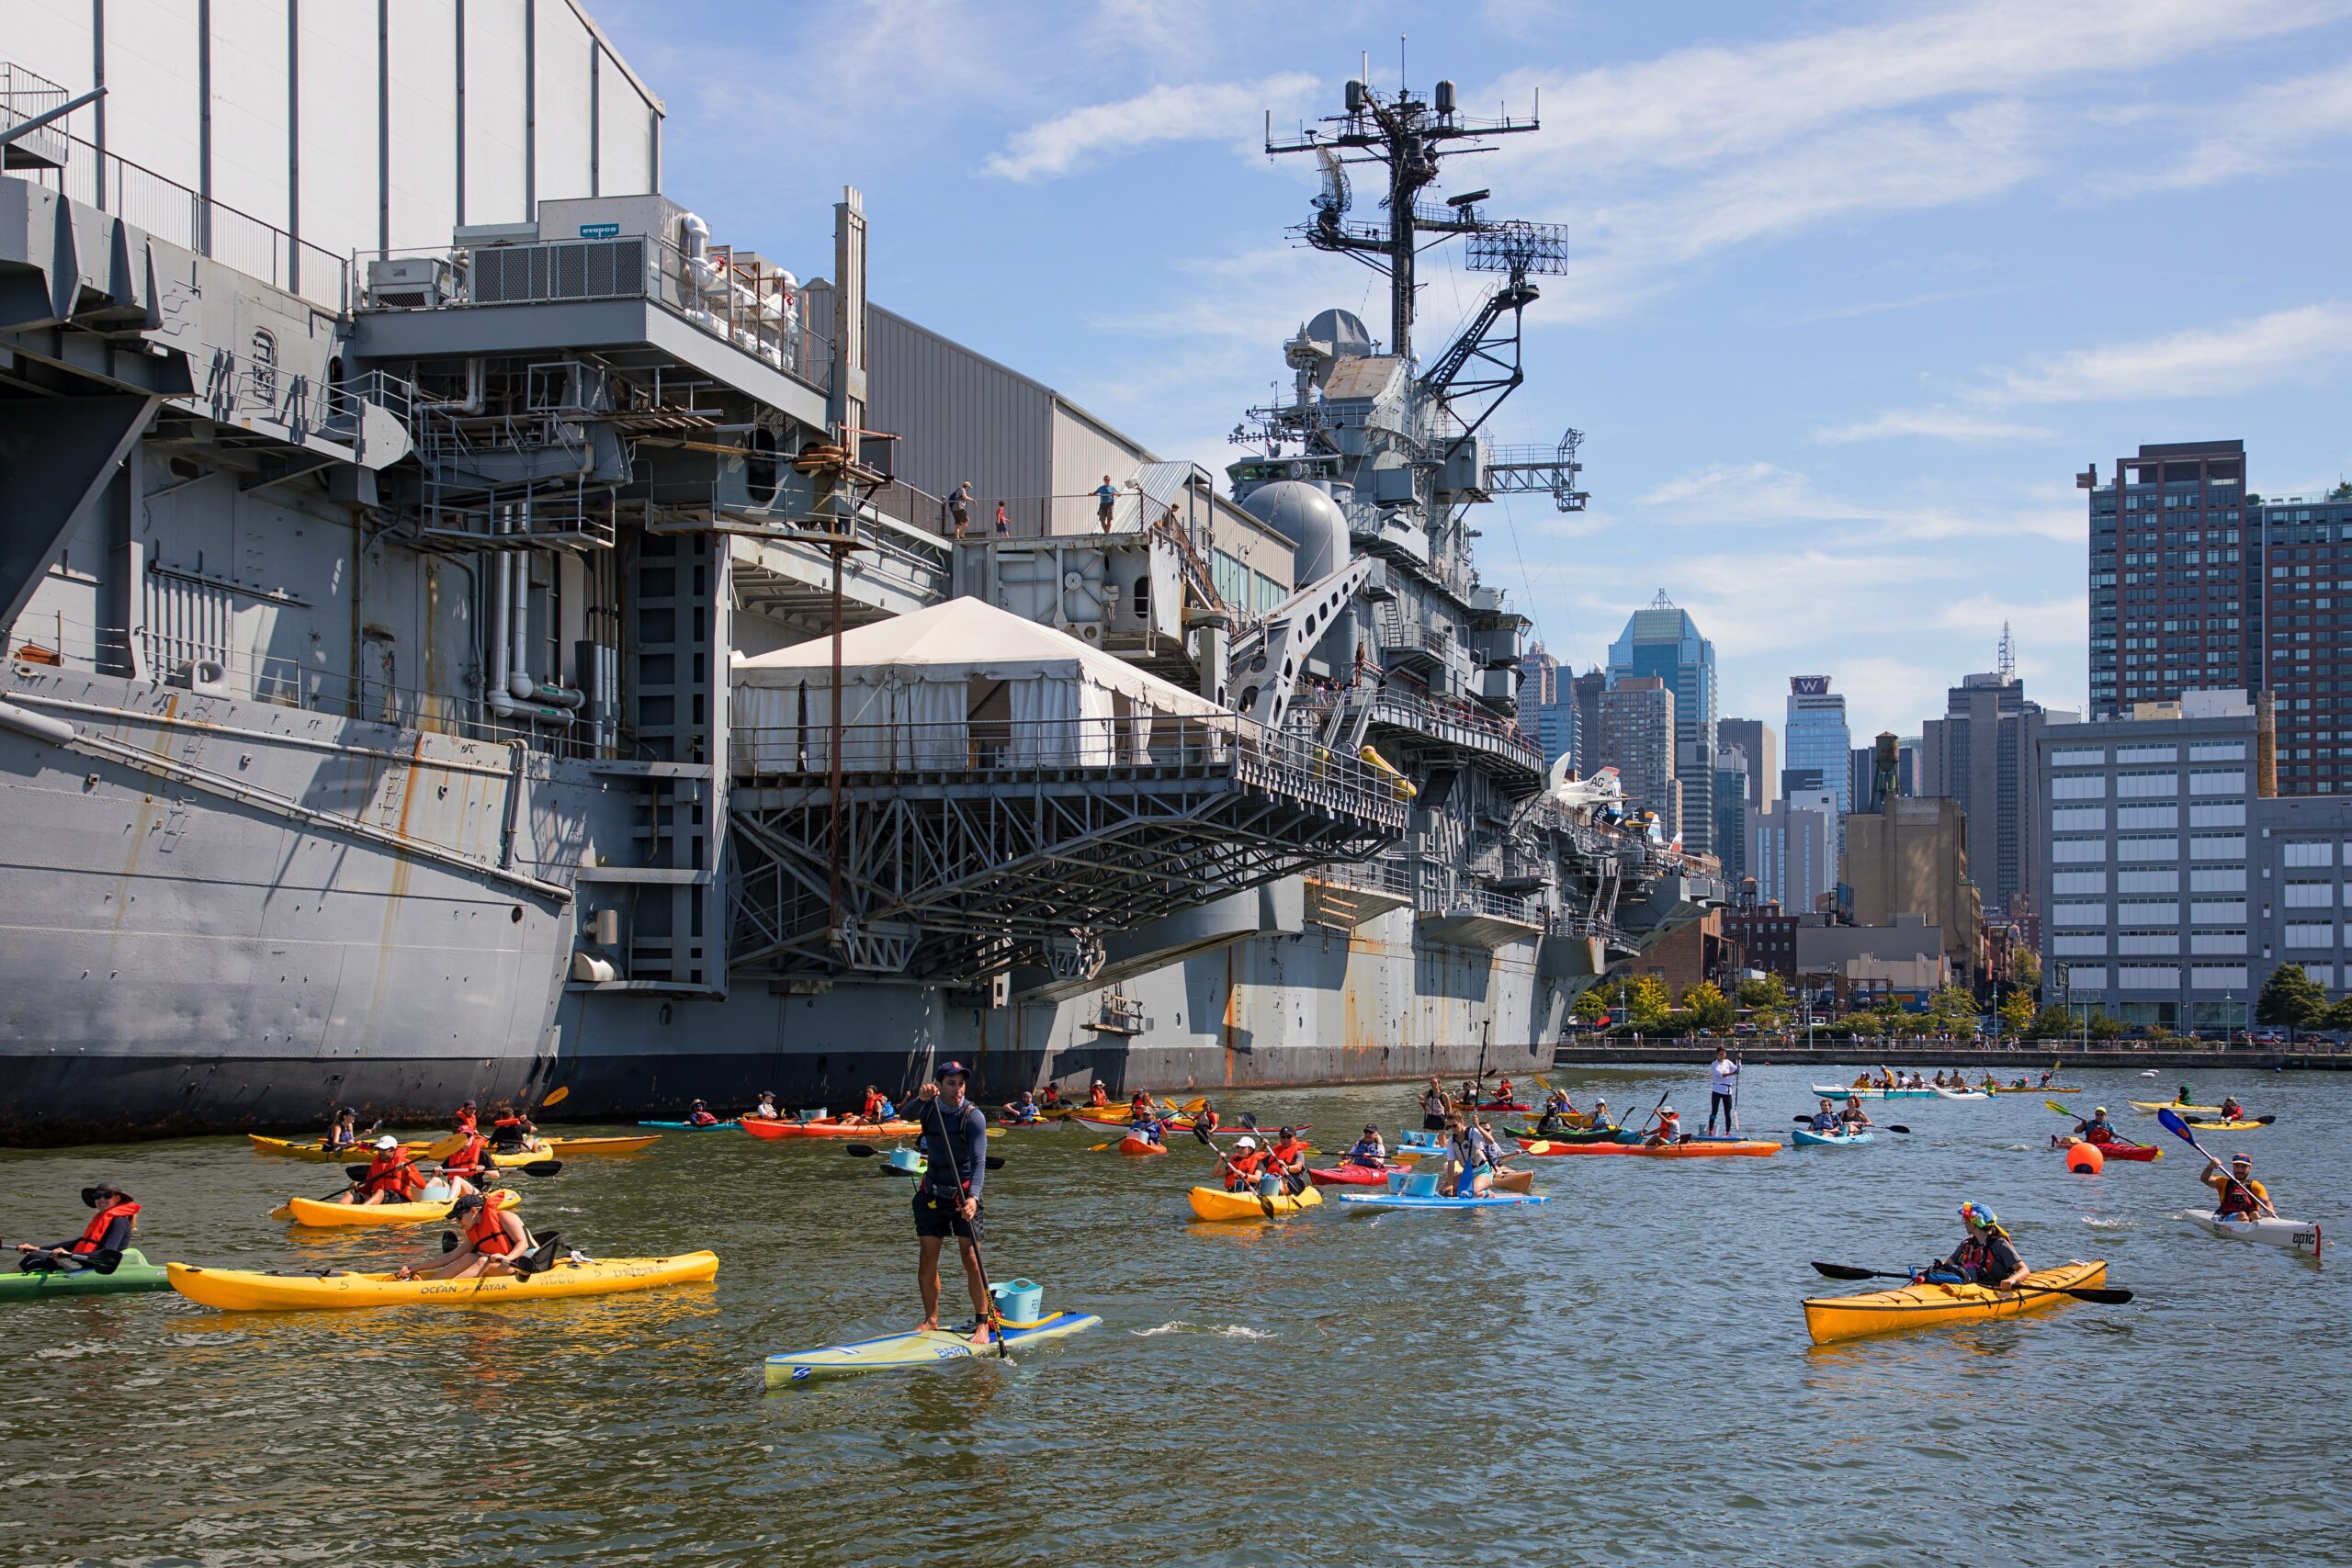 Kayakers paddling alongside the USS Intrepid.